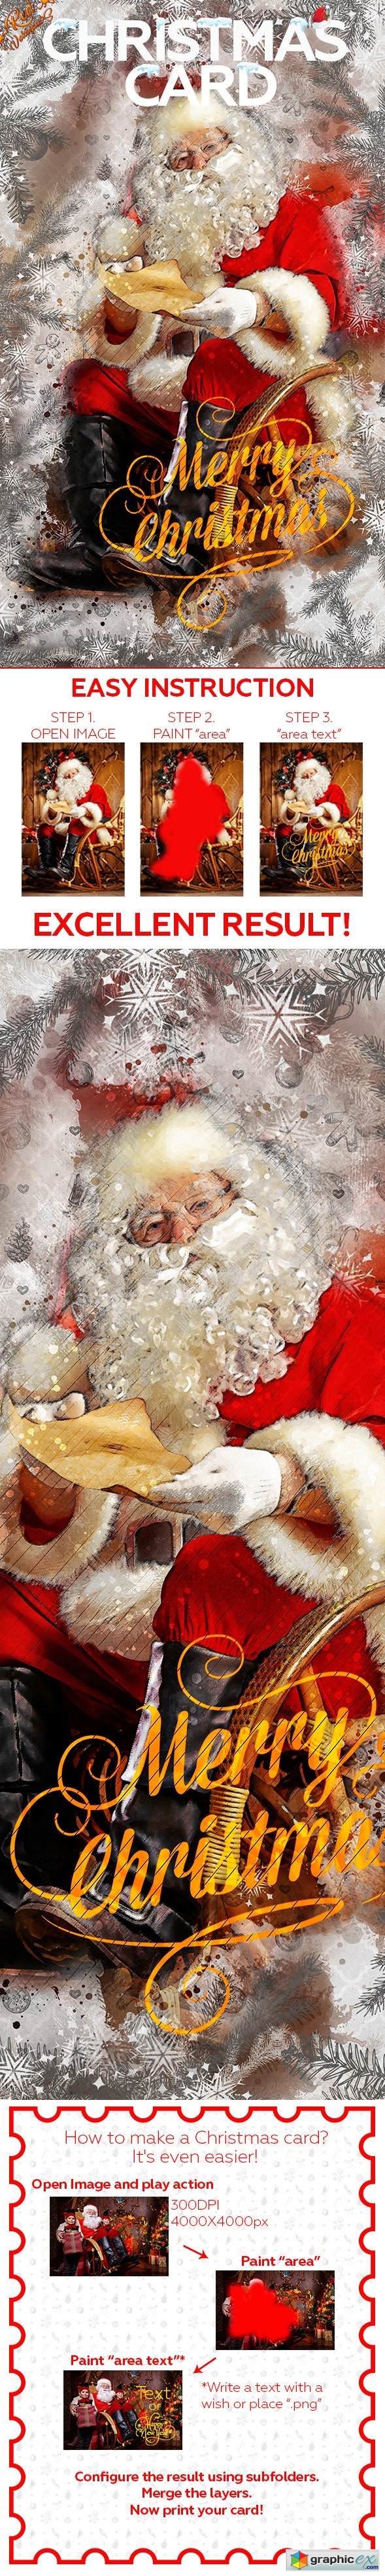 Christmas Card Photoshop Action